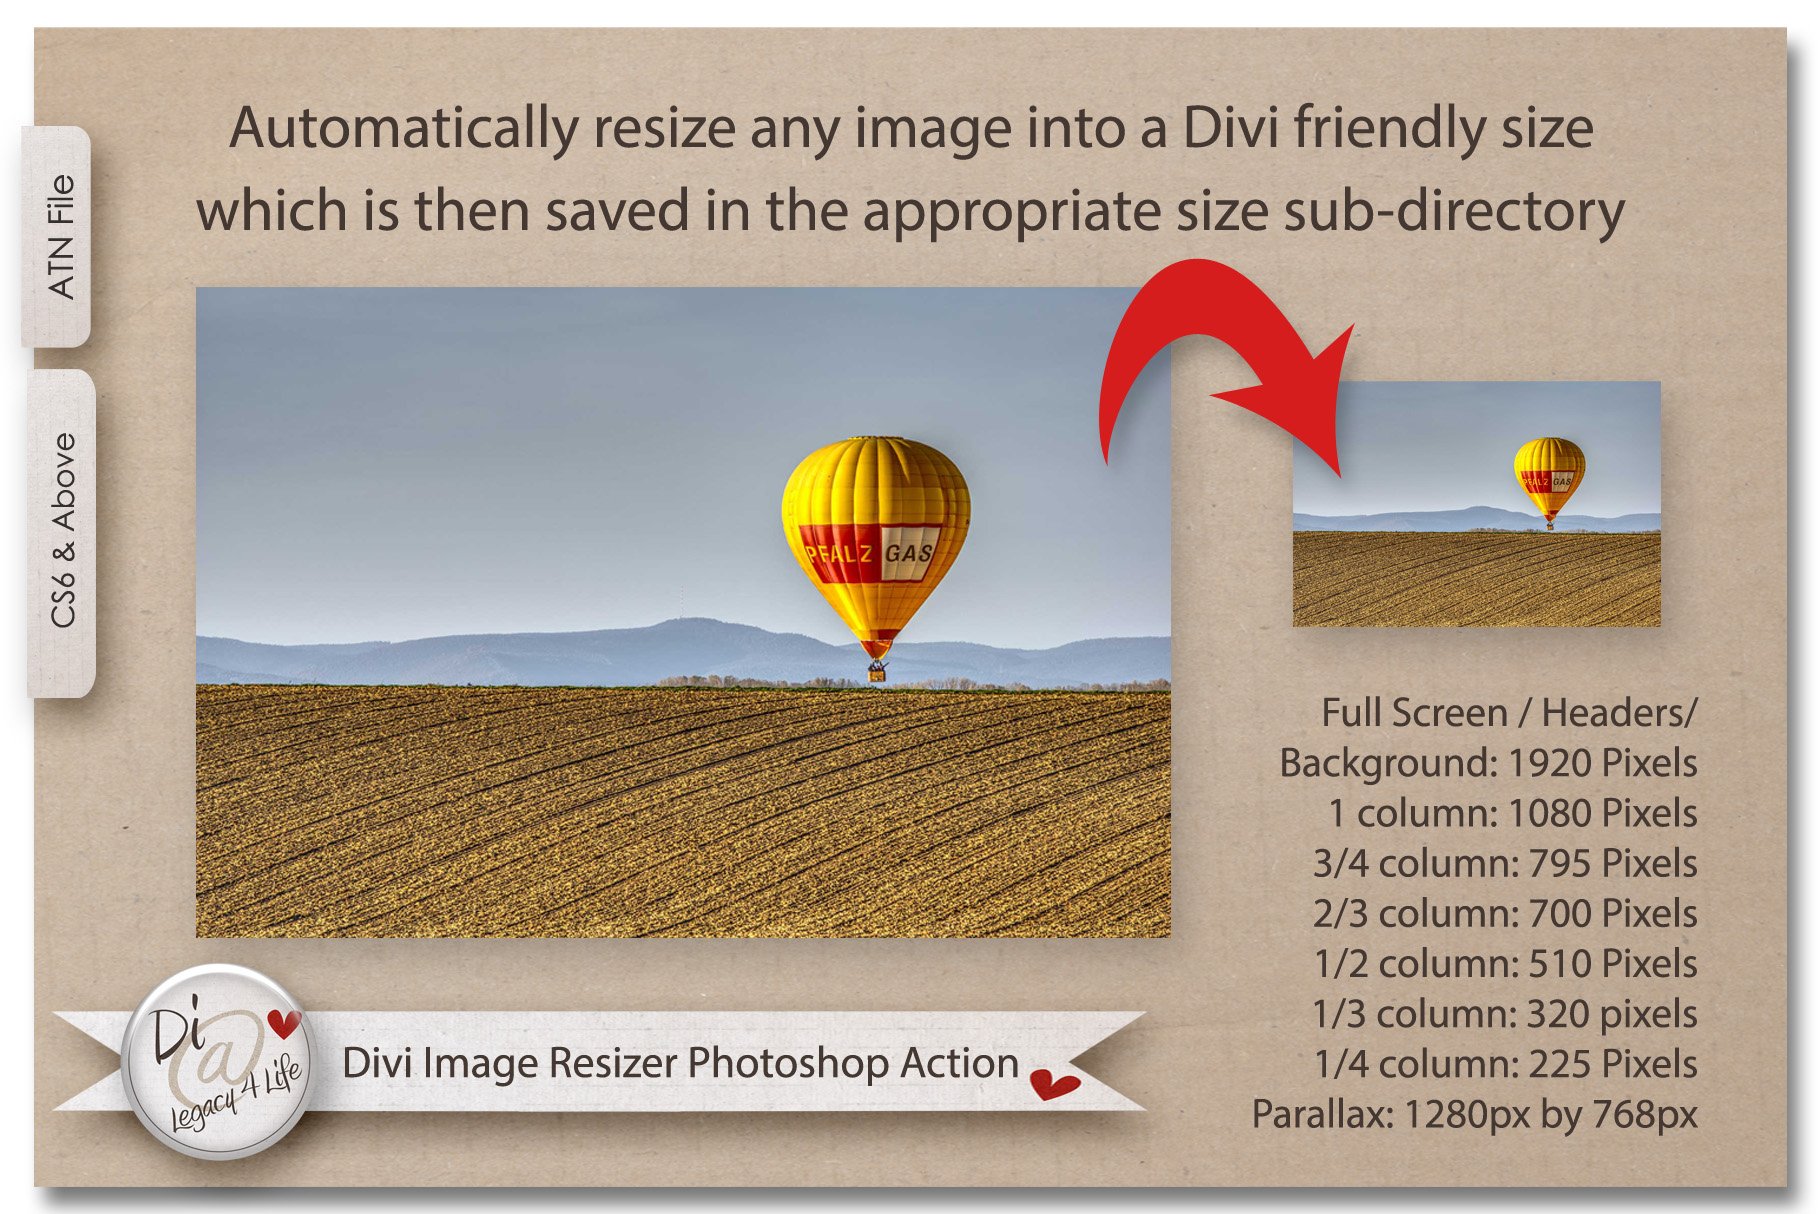 Divi Image Resizer Photoshop Actioncover image.